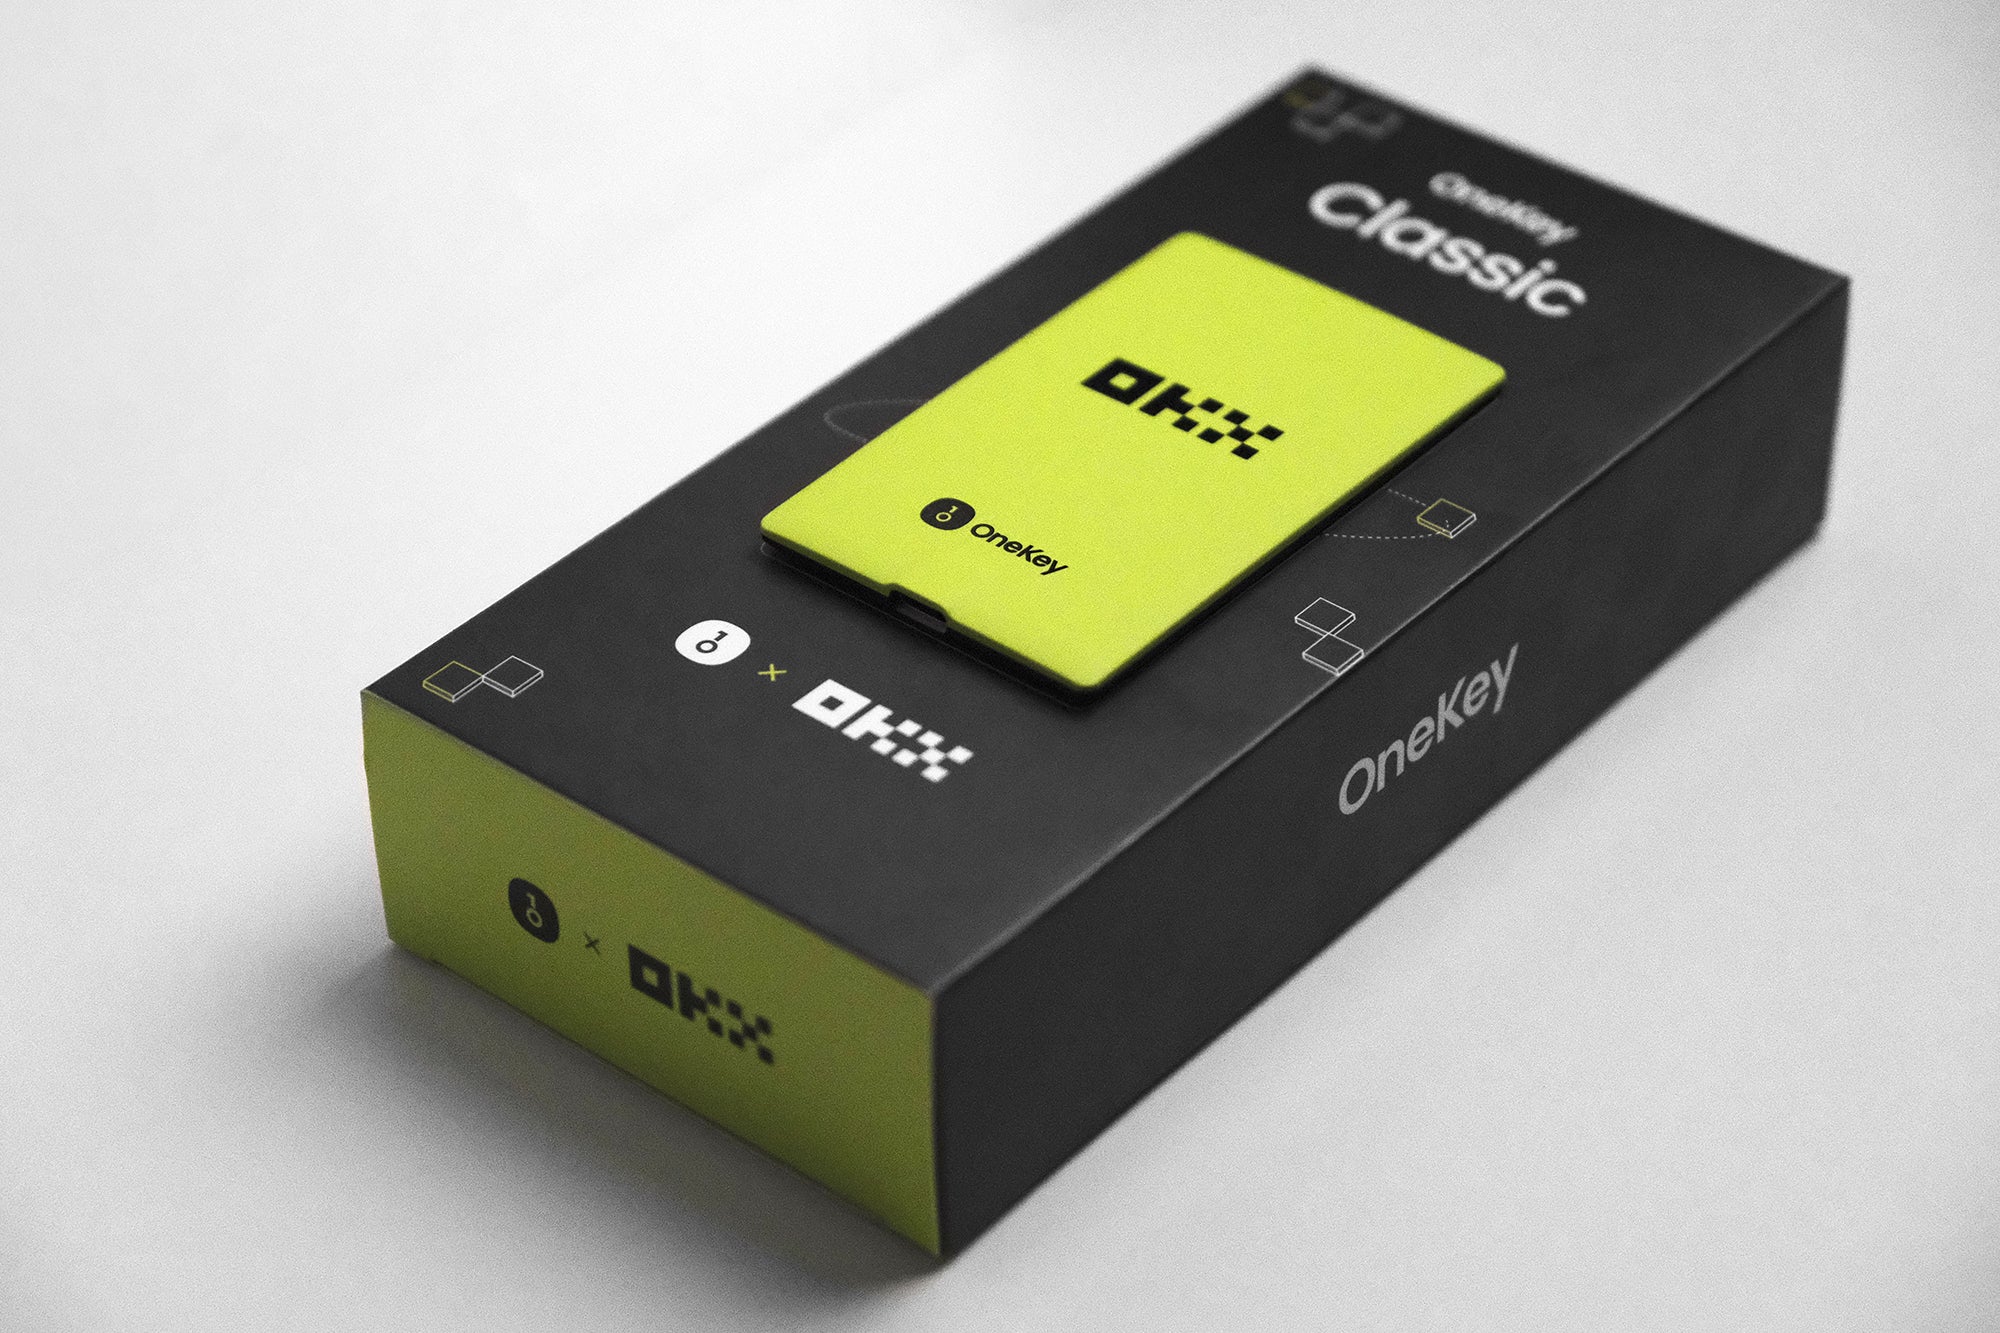 OneKey Classic x OKX - Crypto Hardware Wallet